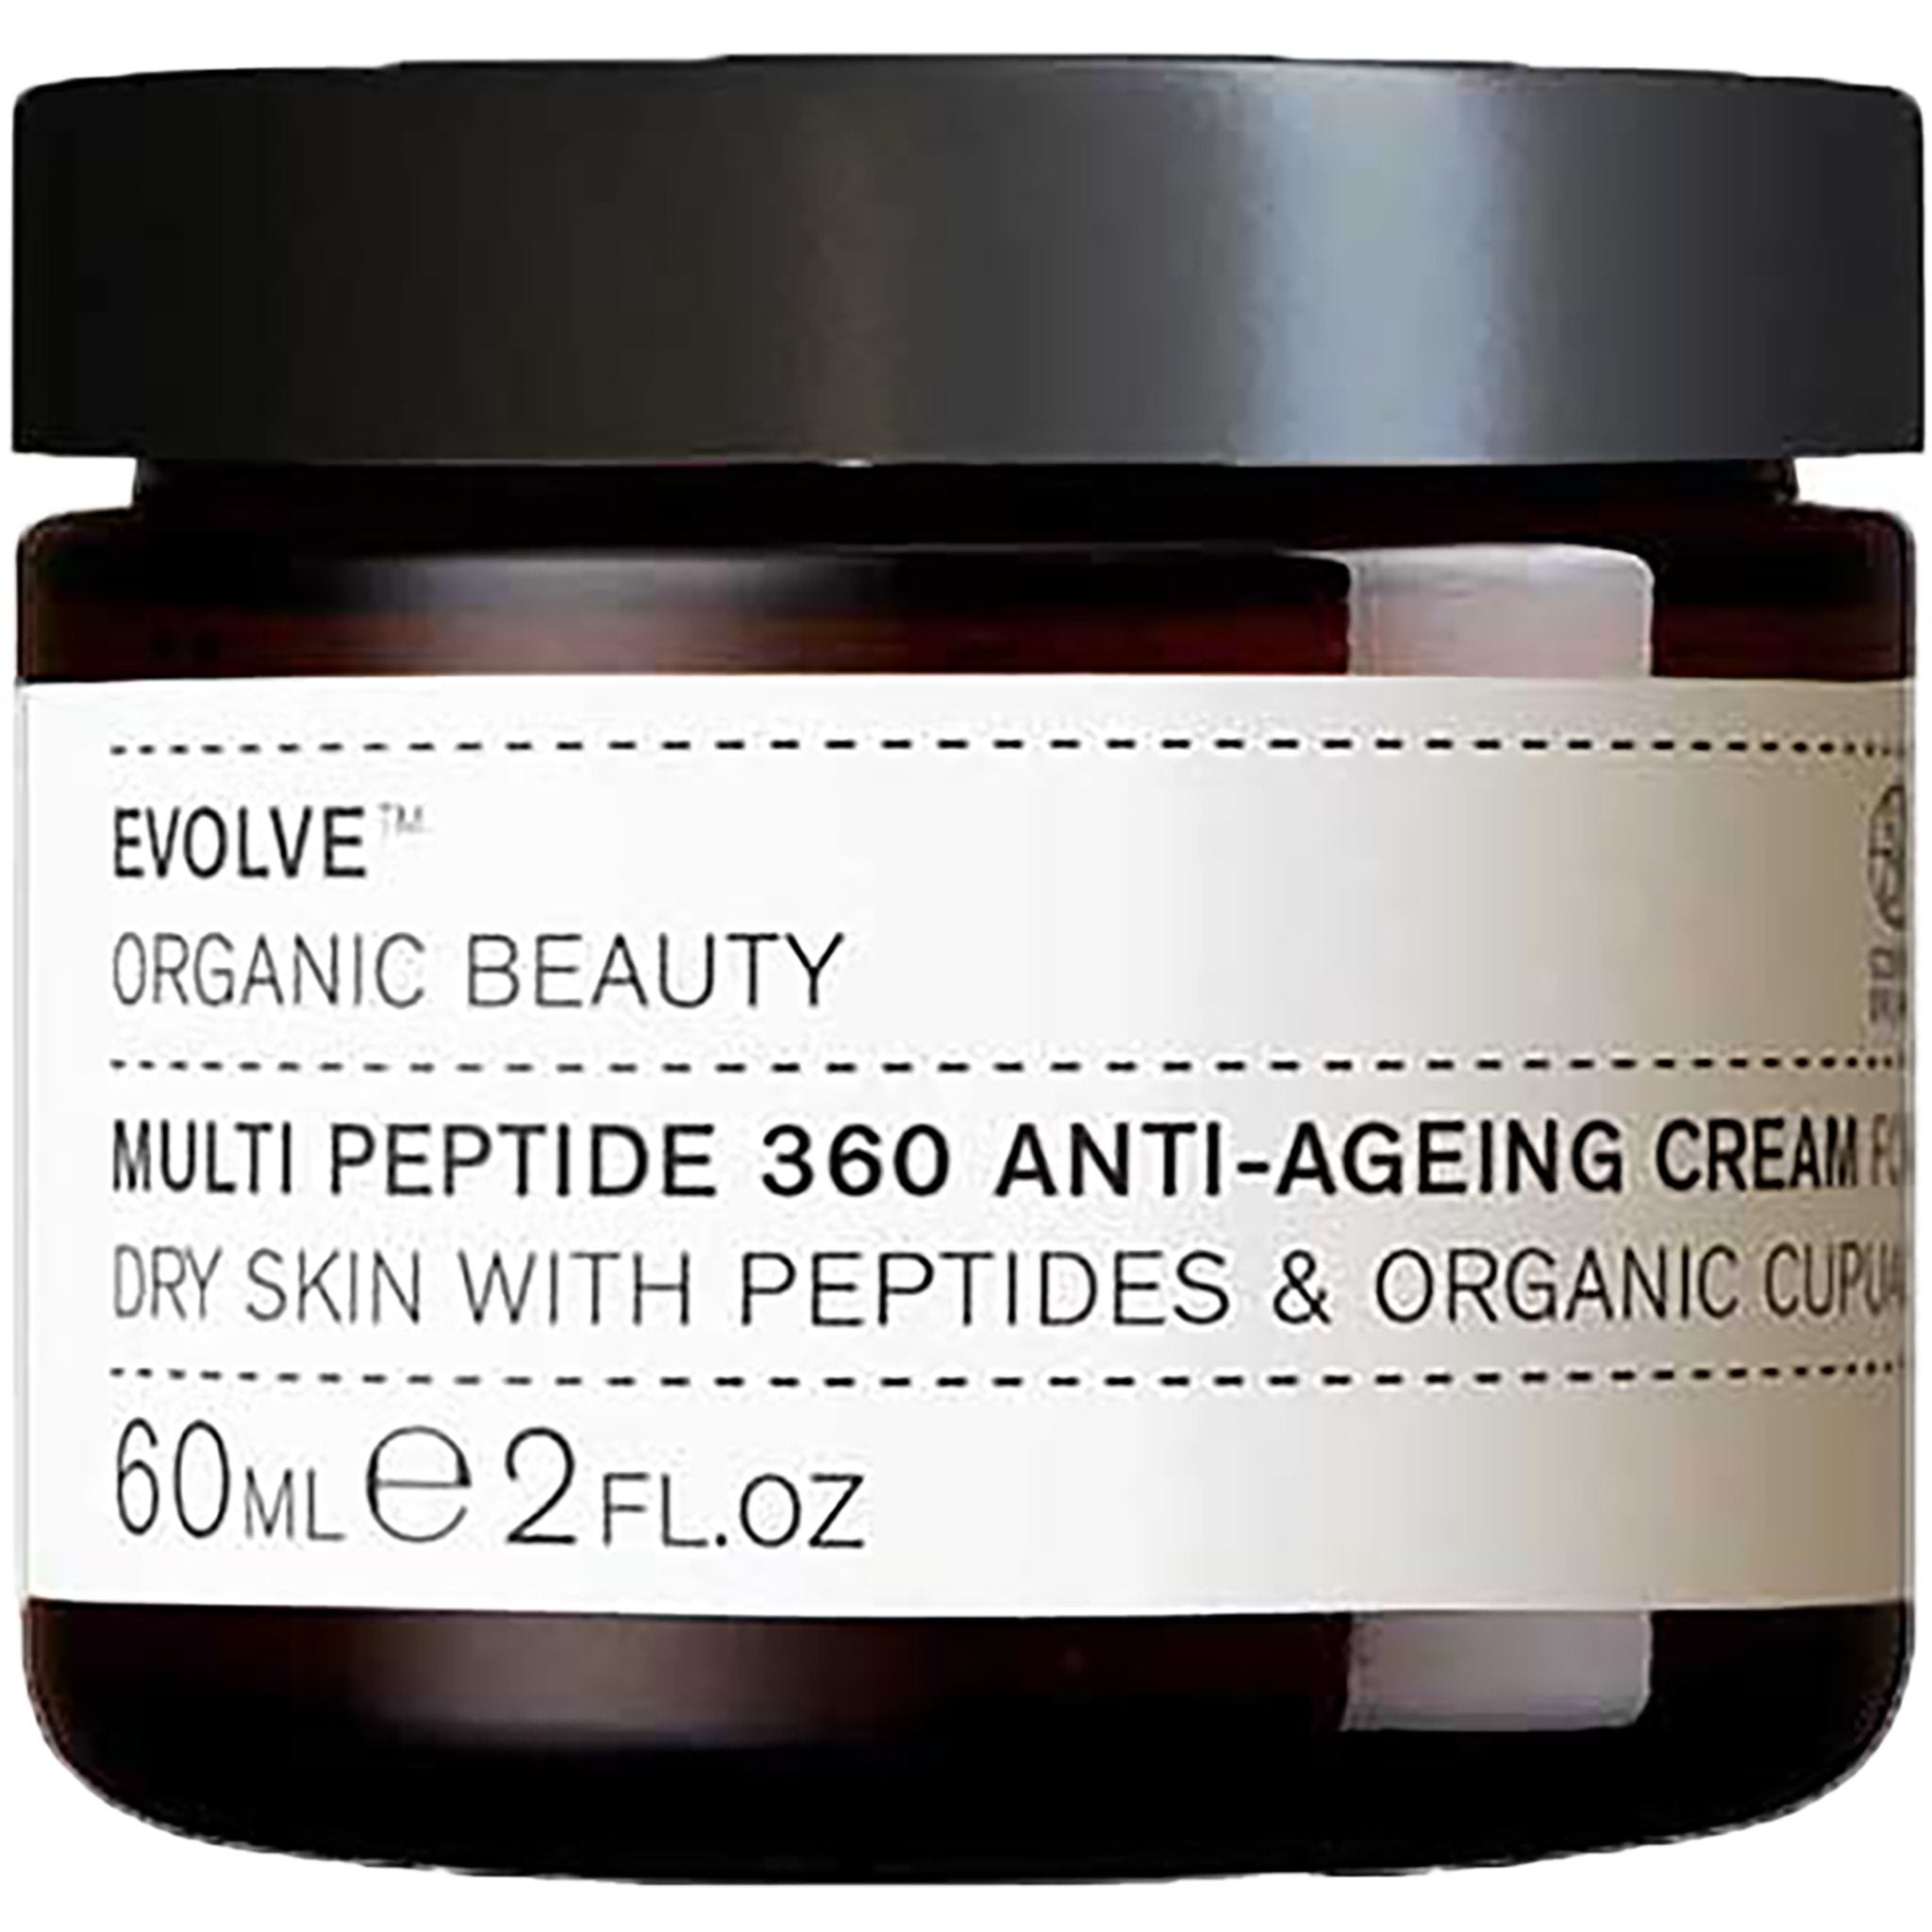 Multi Peptide 360 Anti-Ageing Cream - mypure.co.uk